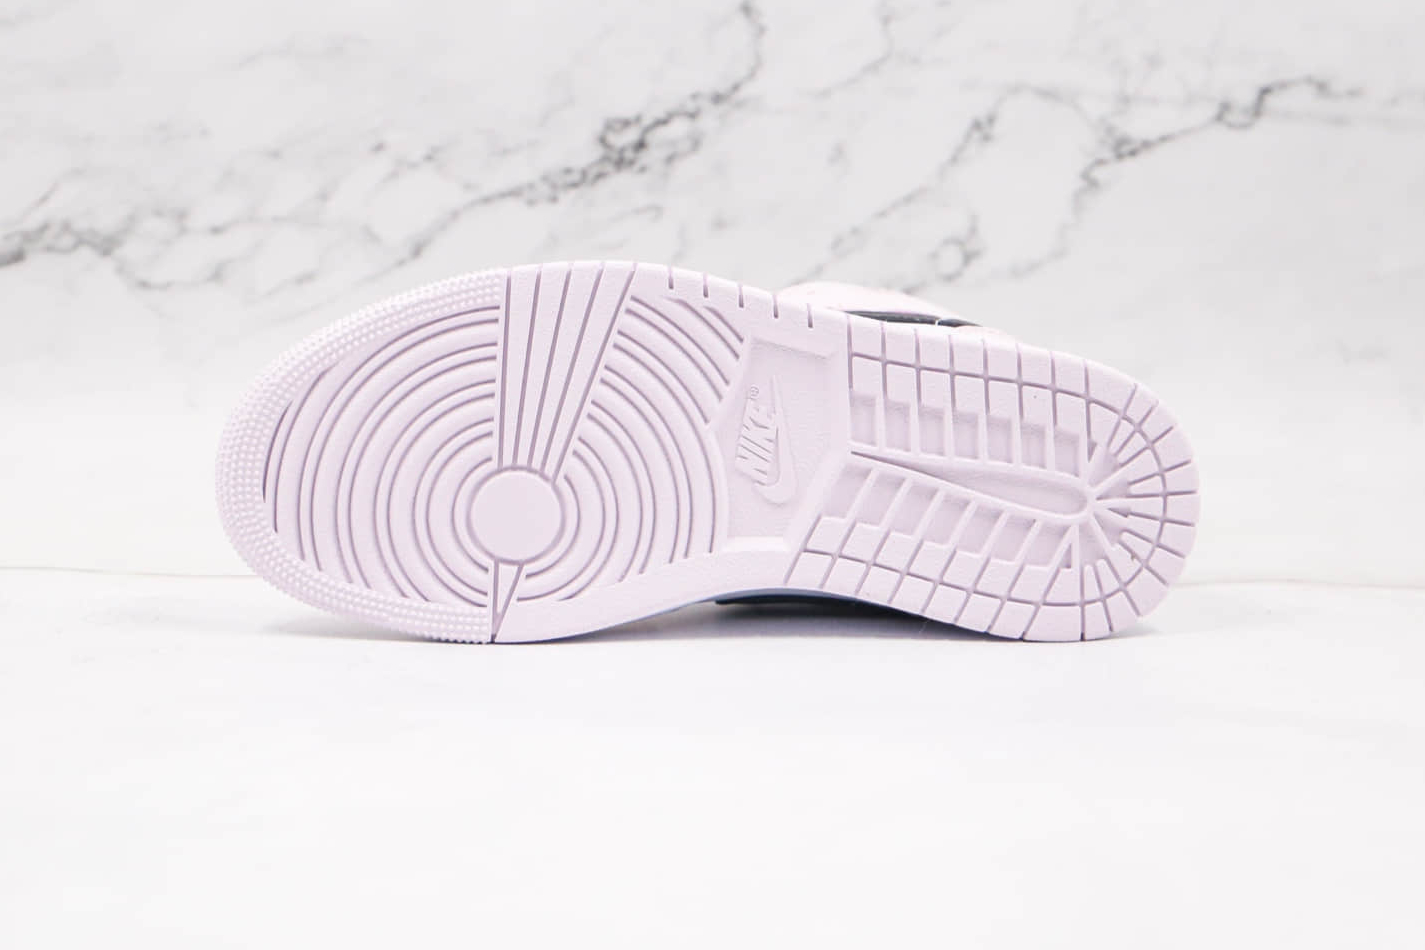 Nike Air Jordan 1 Mid White Pink Black BQ6742-500: Stylish and Versatile Sneakers